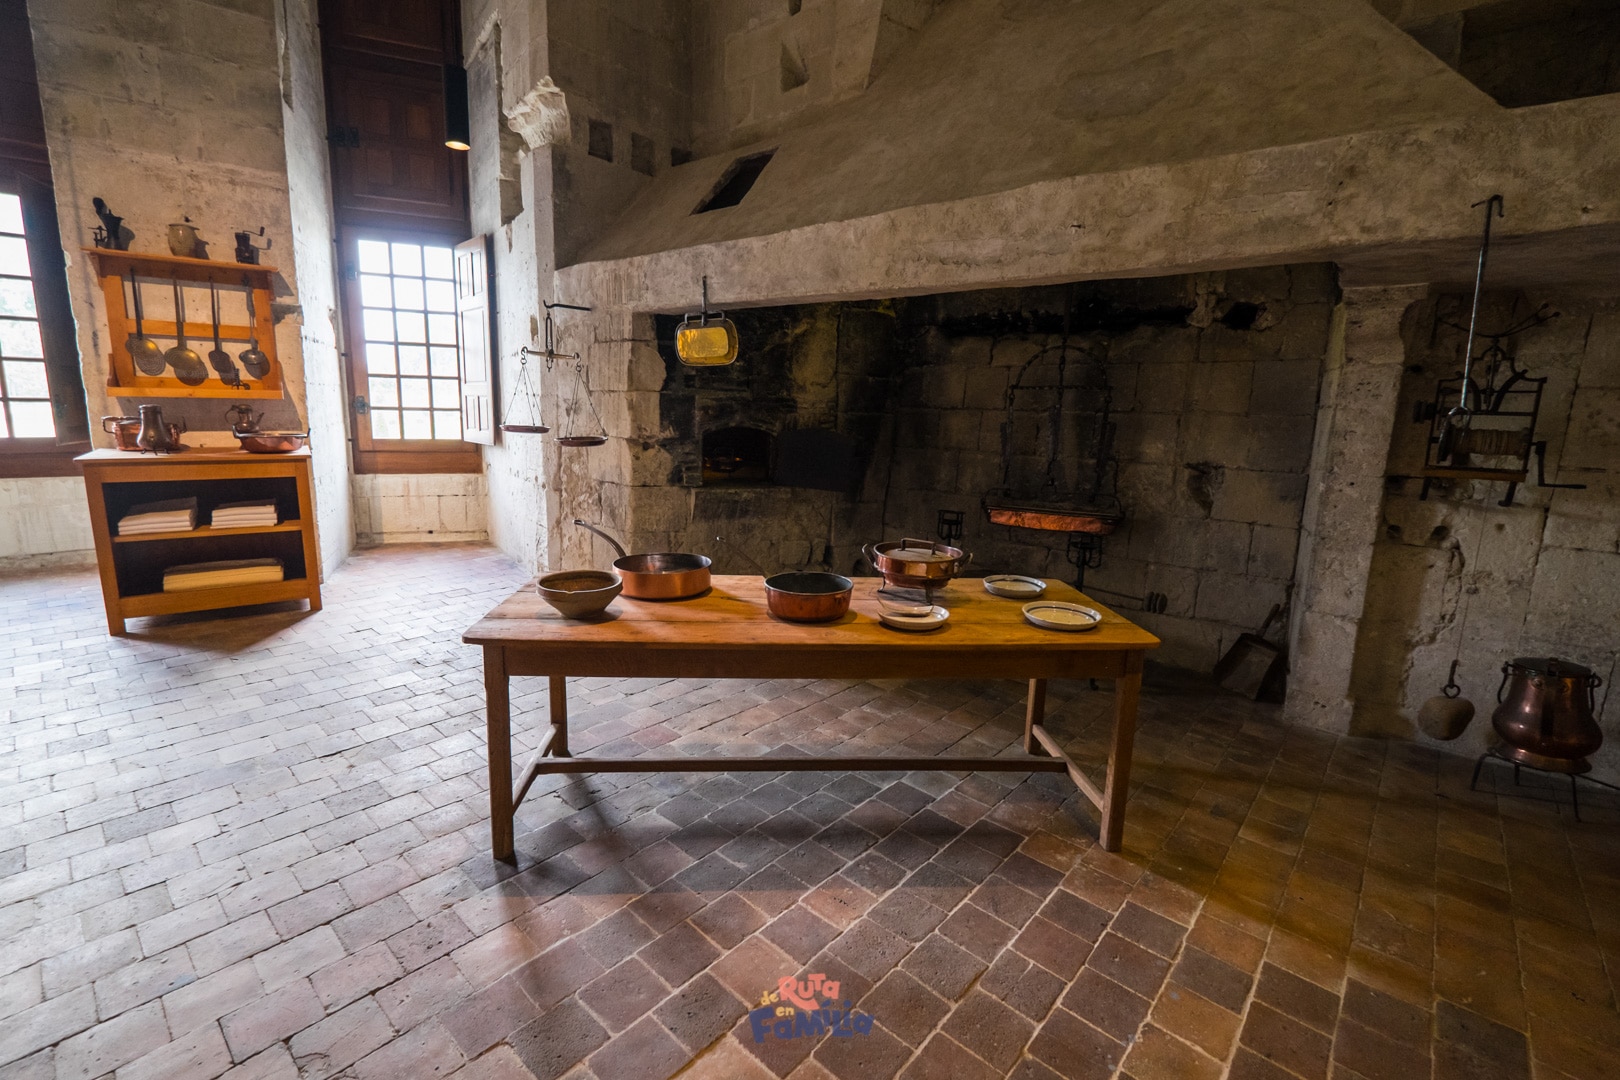 L'interior del castell de Chambord